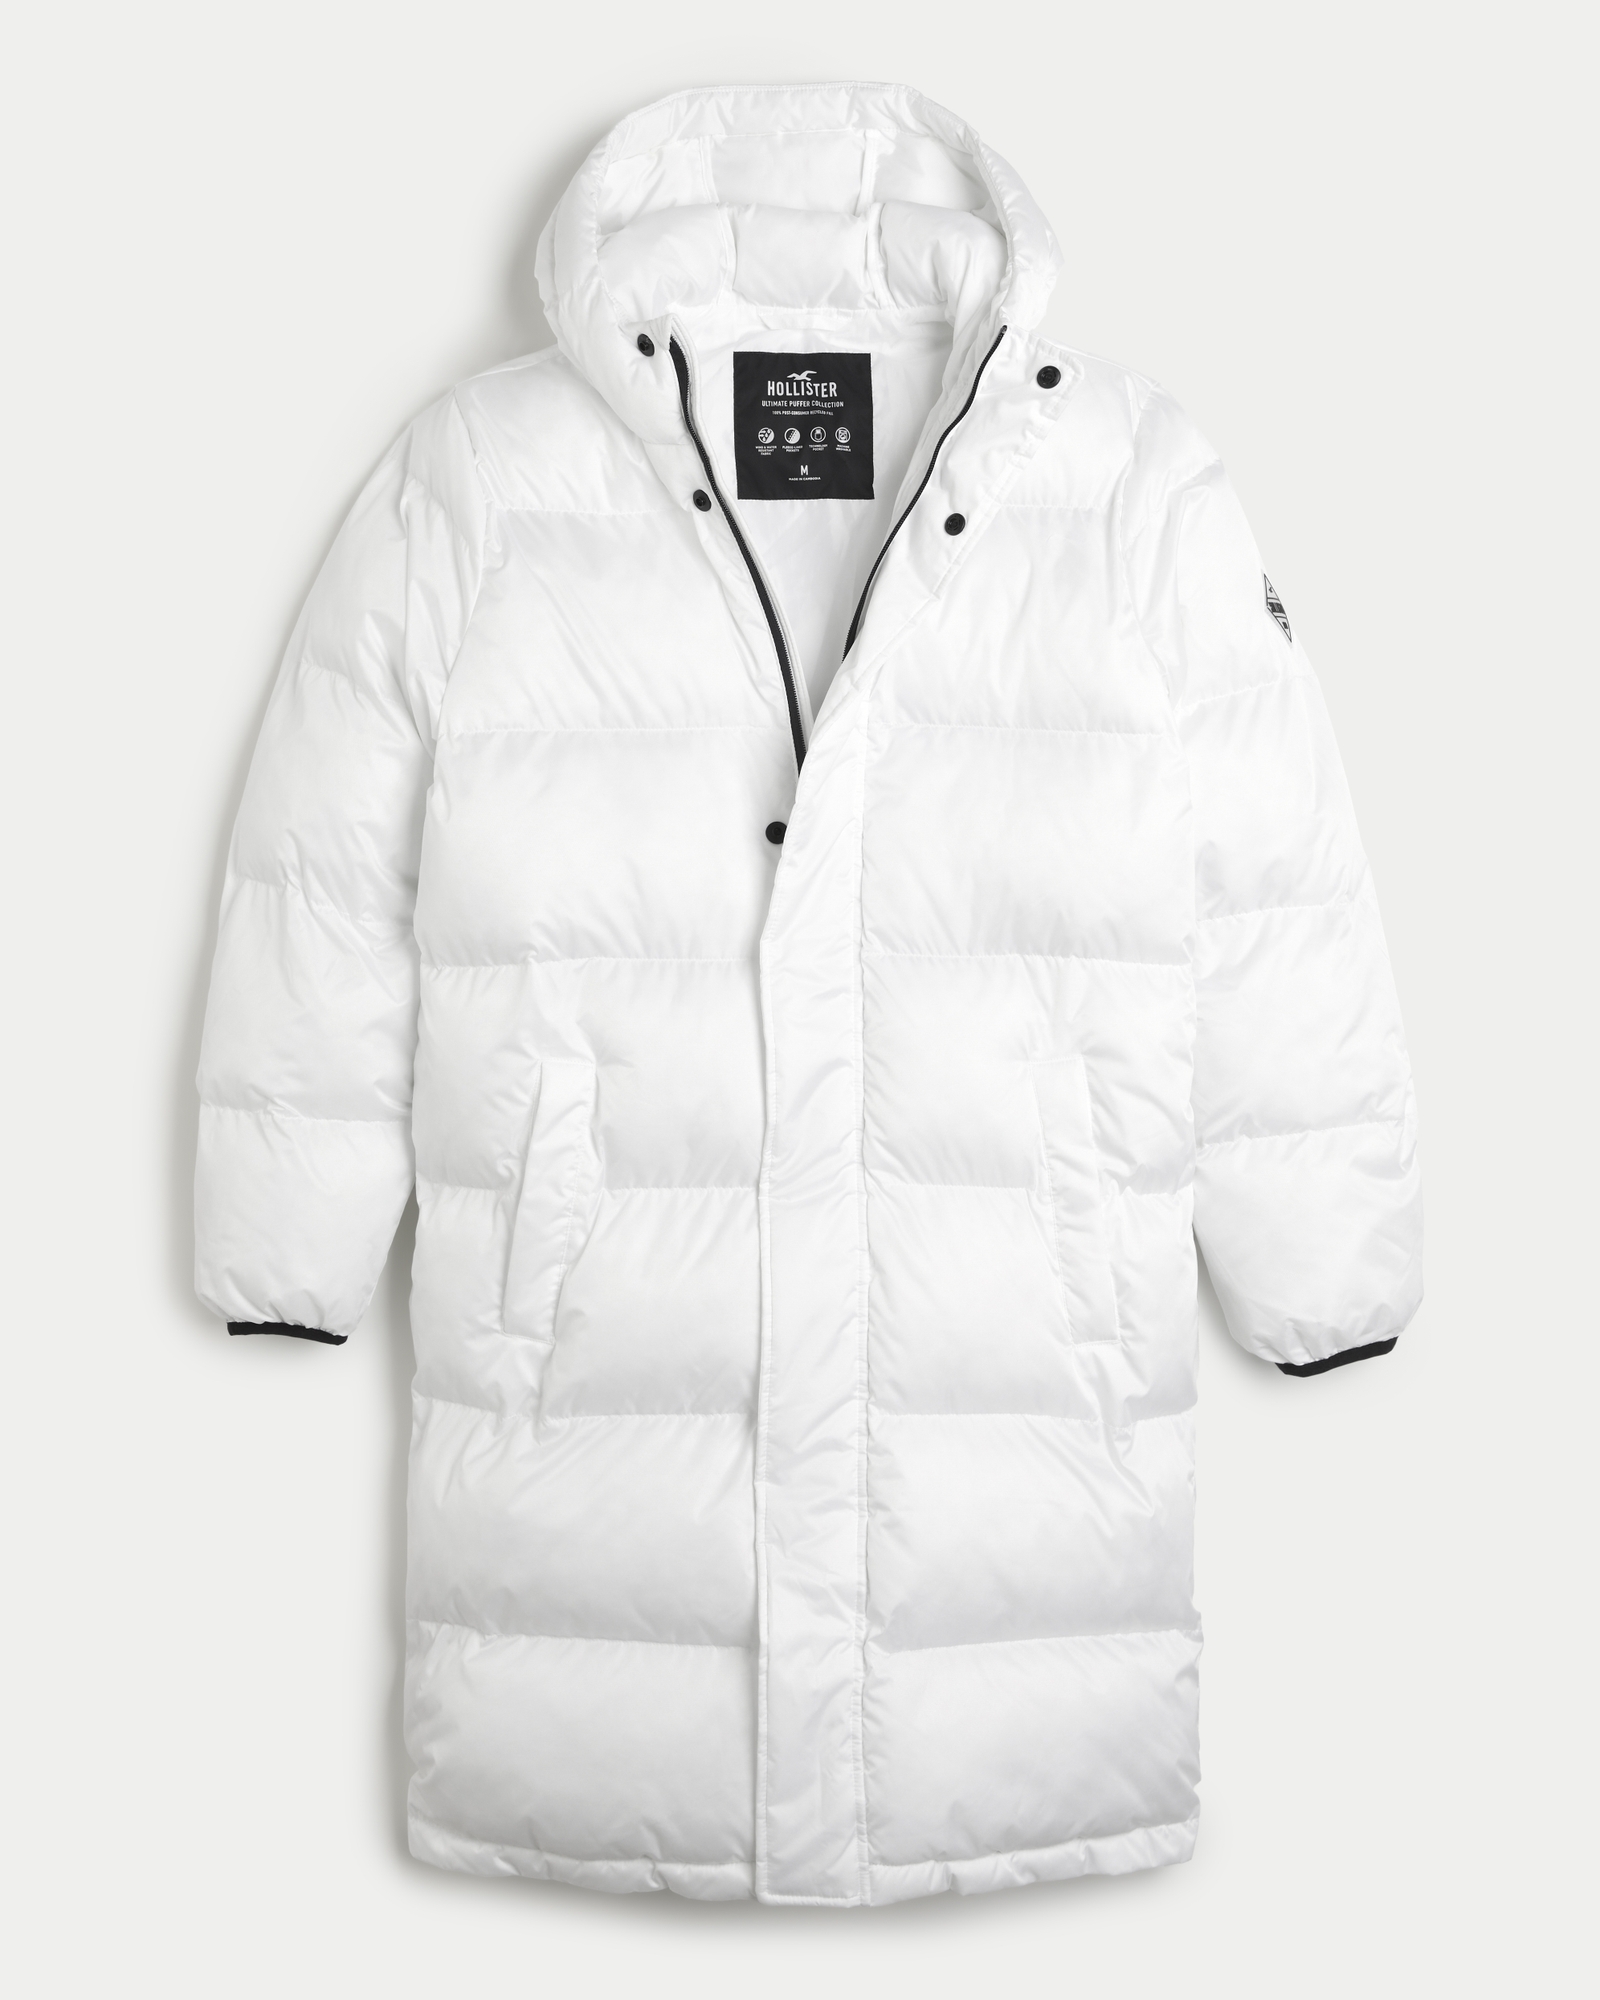 Hollister Puffer Jacket White - Sherpa-Lined Women's Size Medium BRAND NEW!!